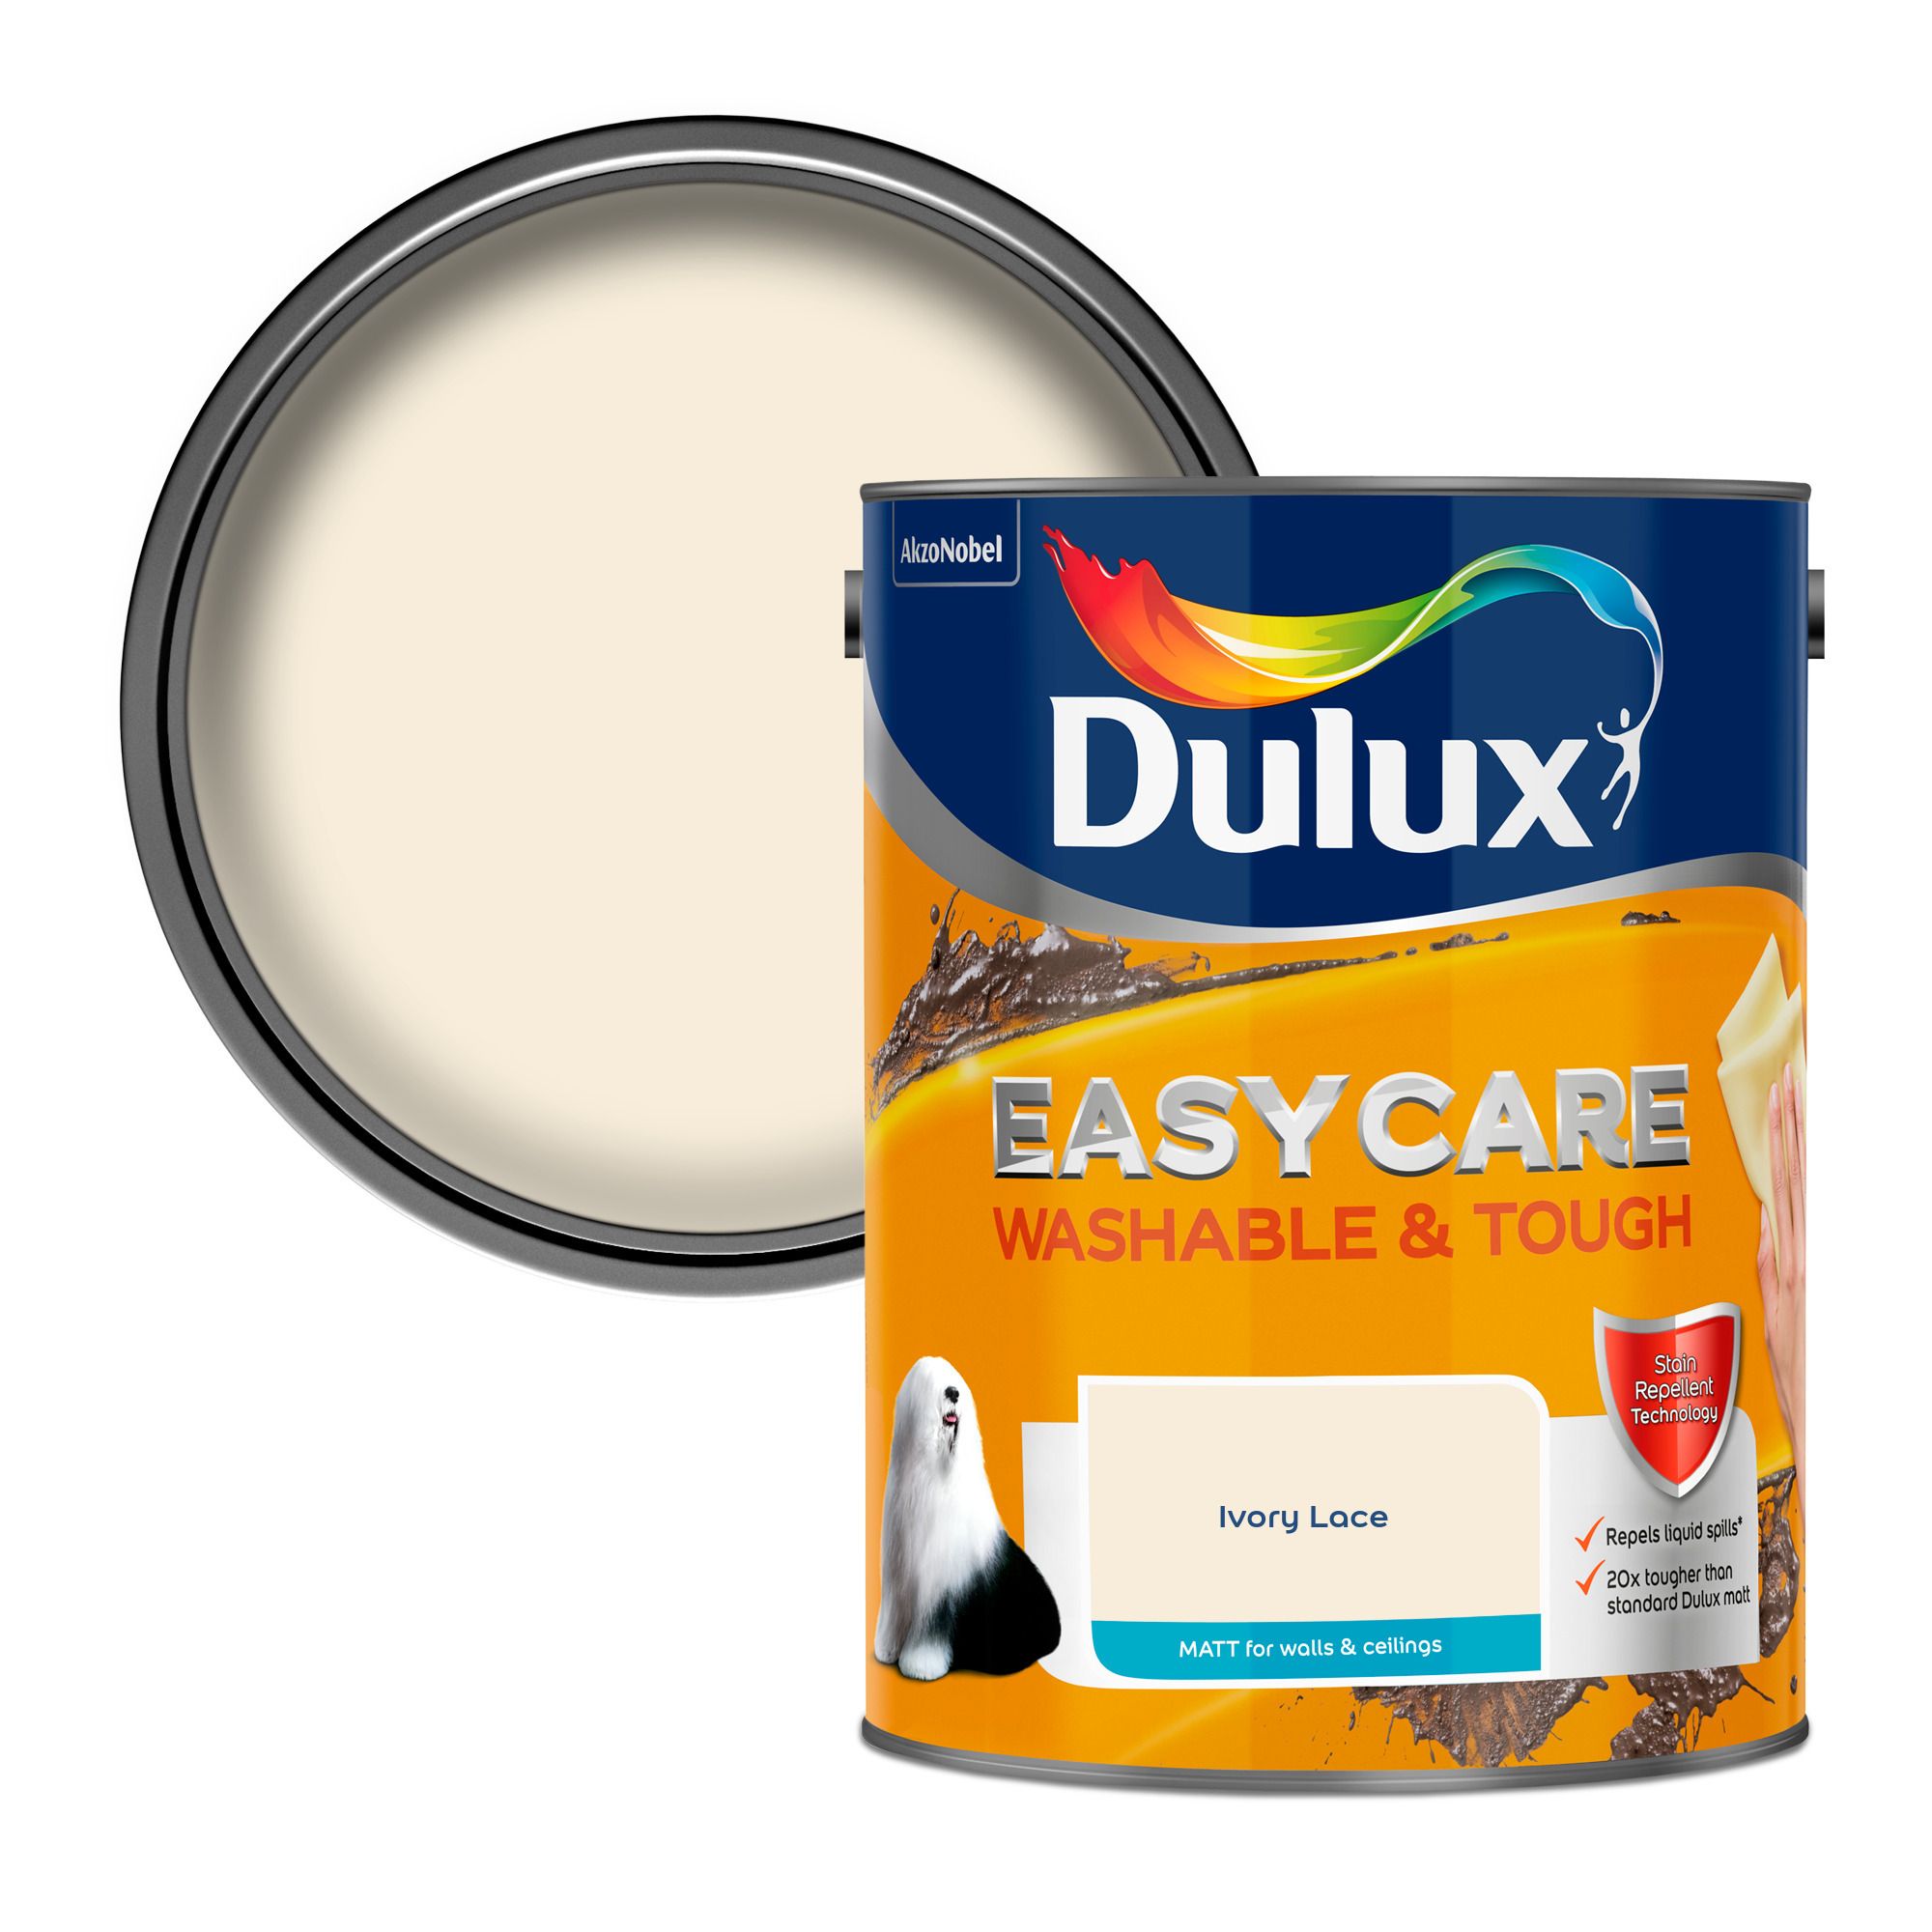 Dulux Easycare Ivory Lace Matt Emulsion Paint 5l~5010212640517 02c Bq?$MOB PREV$&$width=768&$height=768